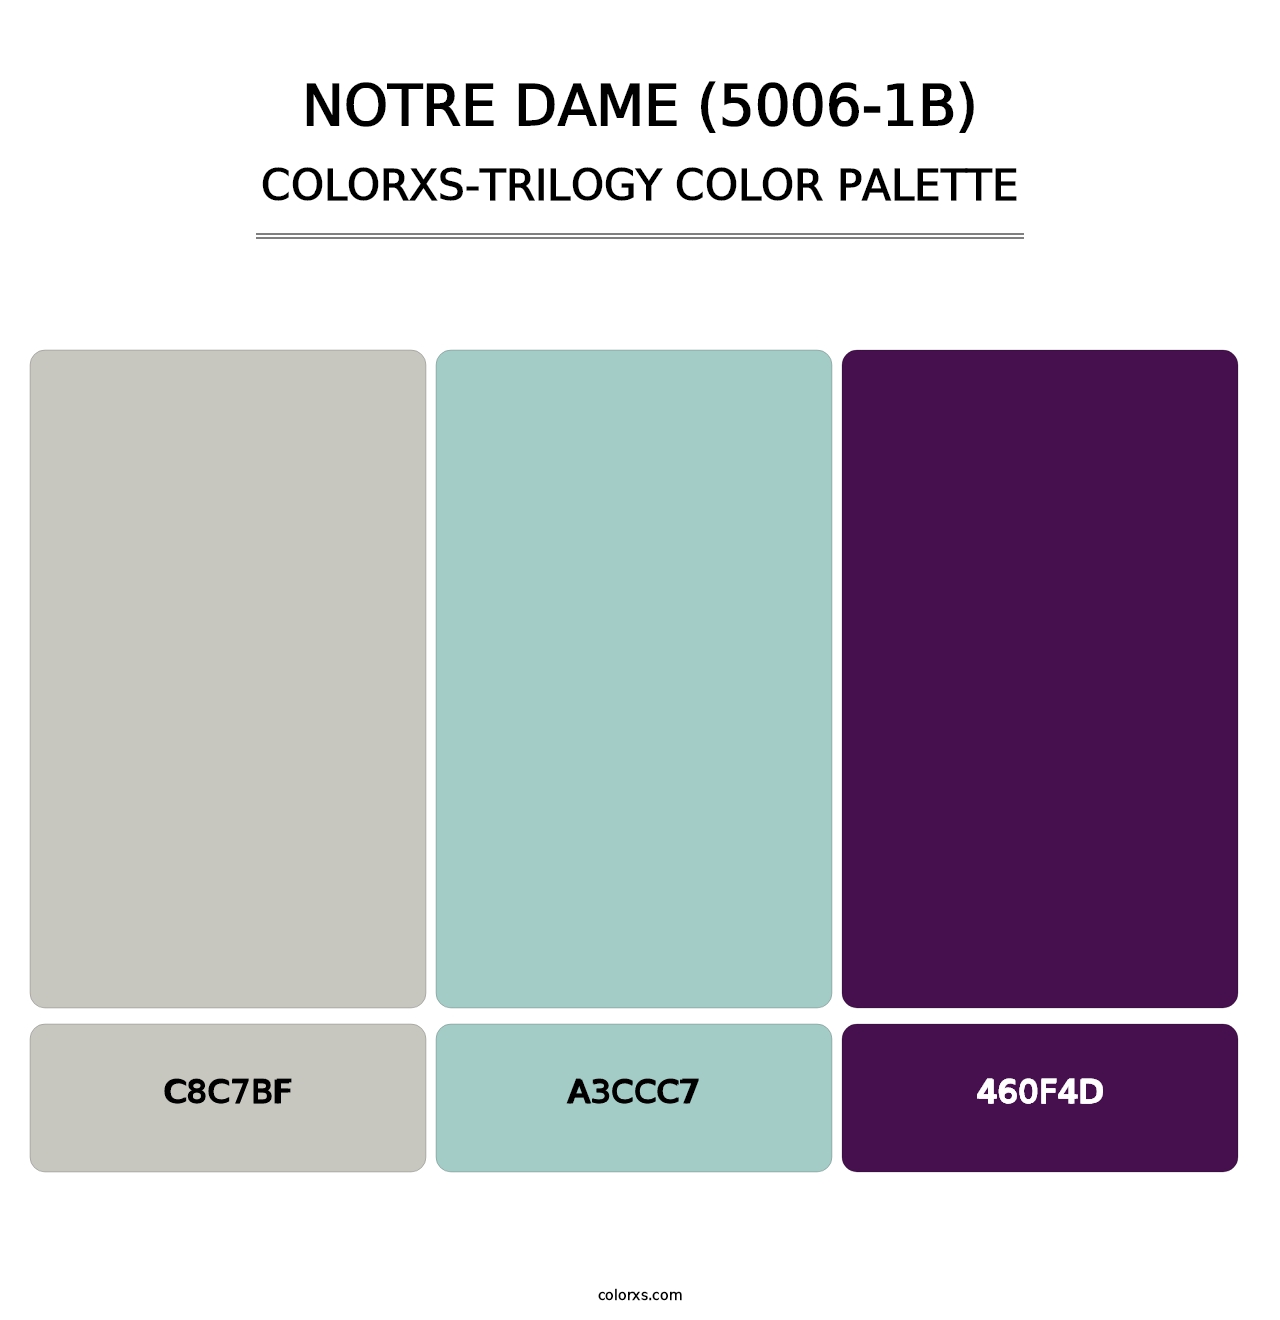 Notre Dame (5006-1B) - Colorxs Trilogy Palette